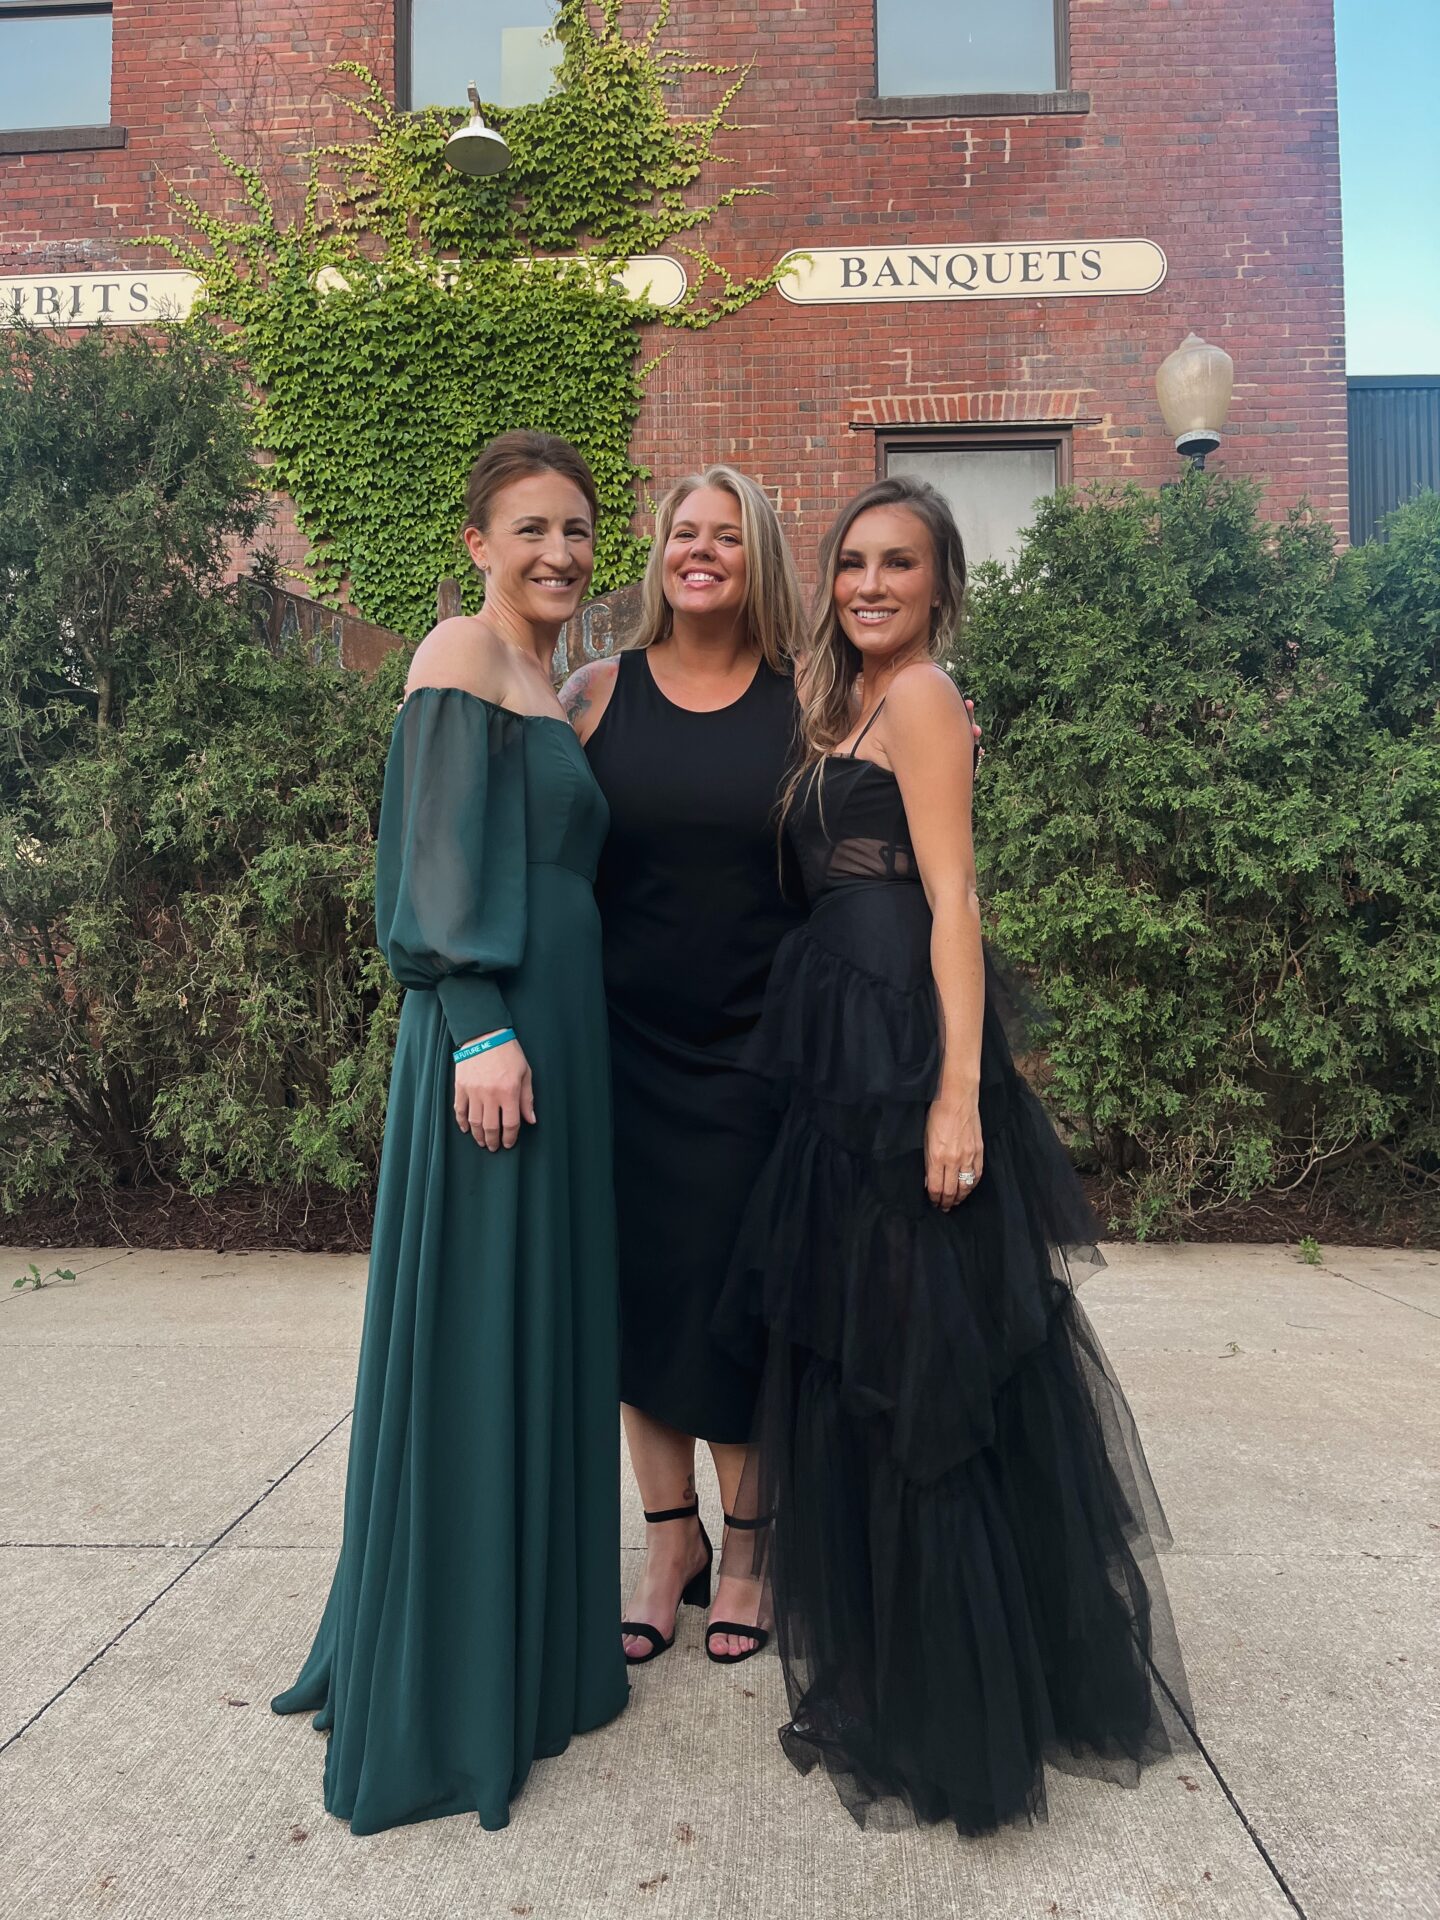 fashion blogger Angela Lanter attending family Greek wedding with friends wearing formal black dress by BCBG Max Azria.